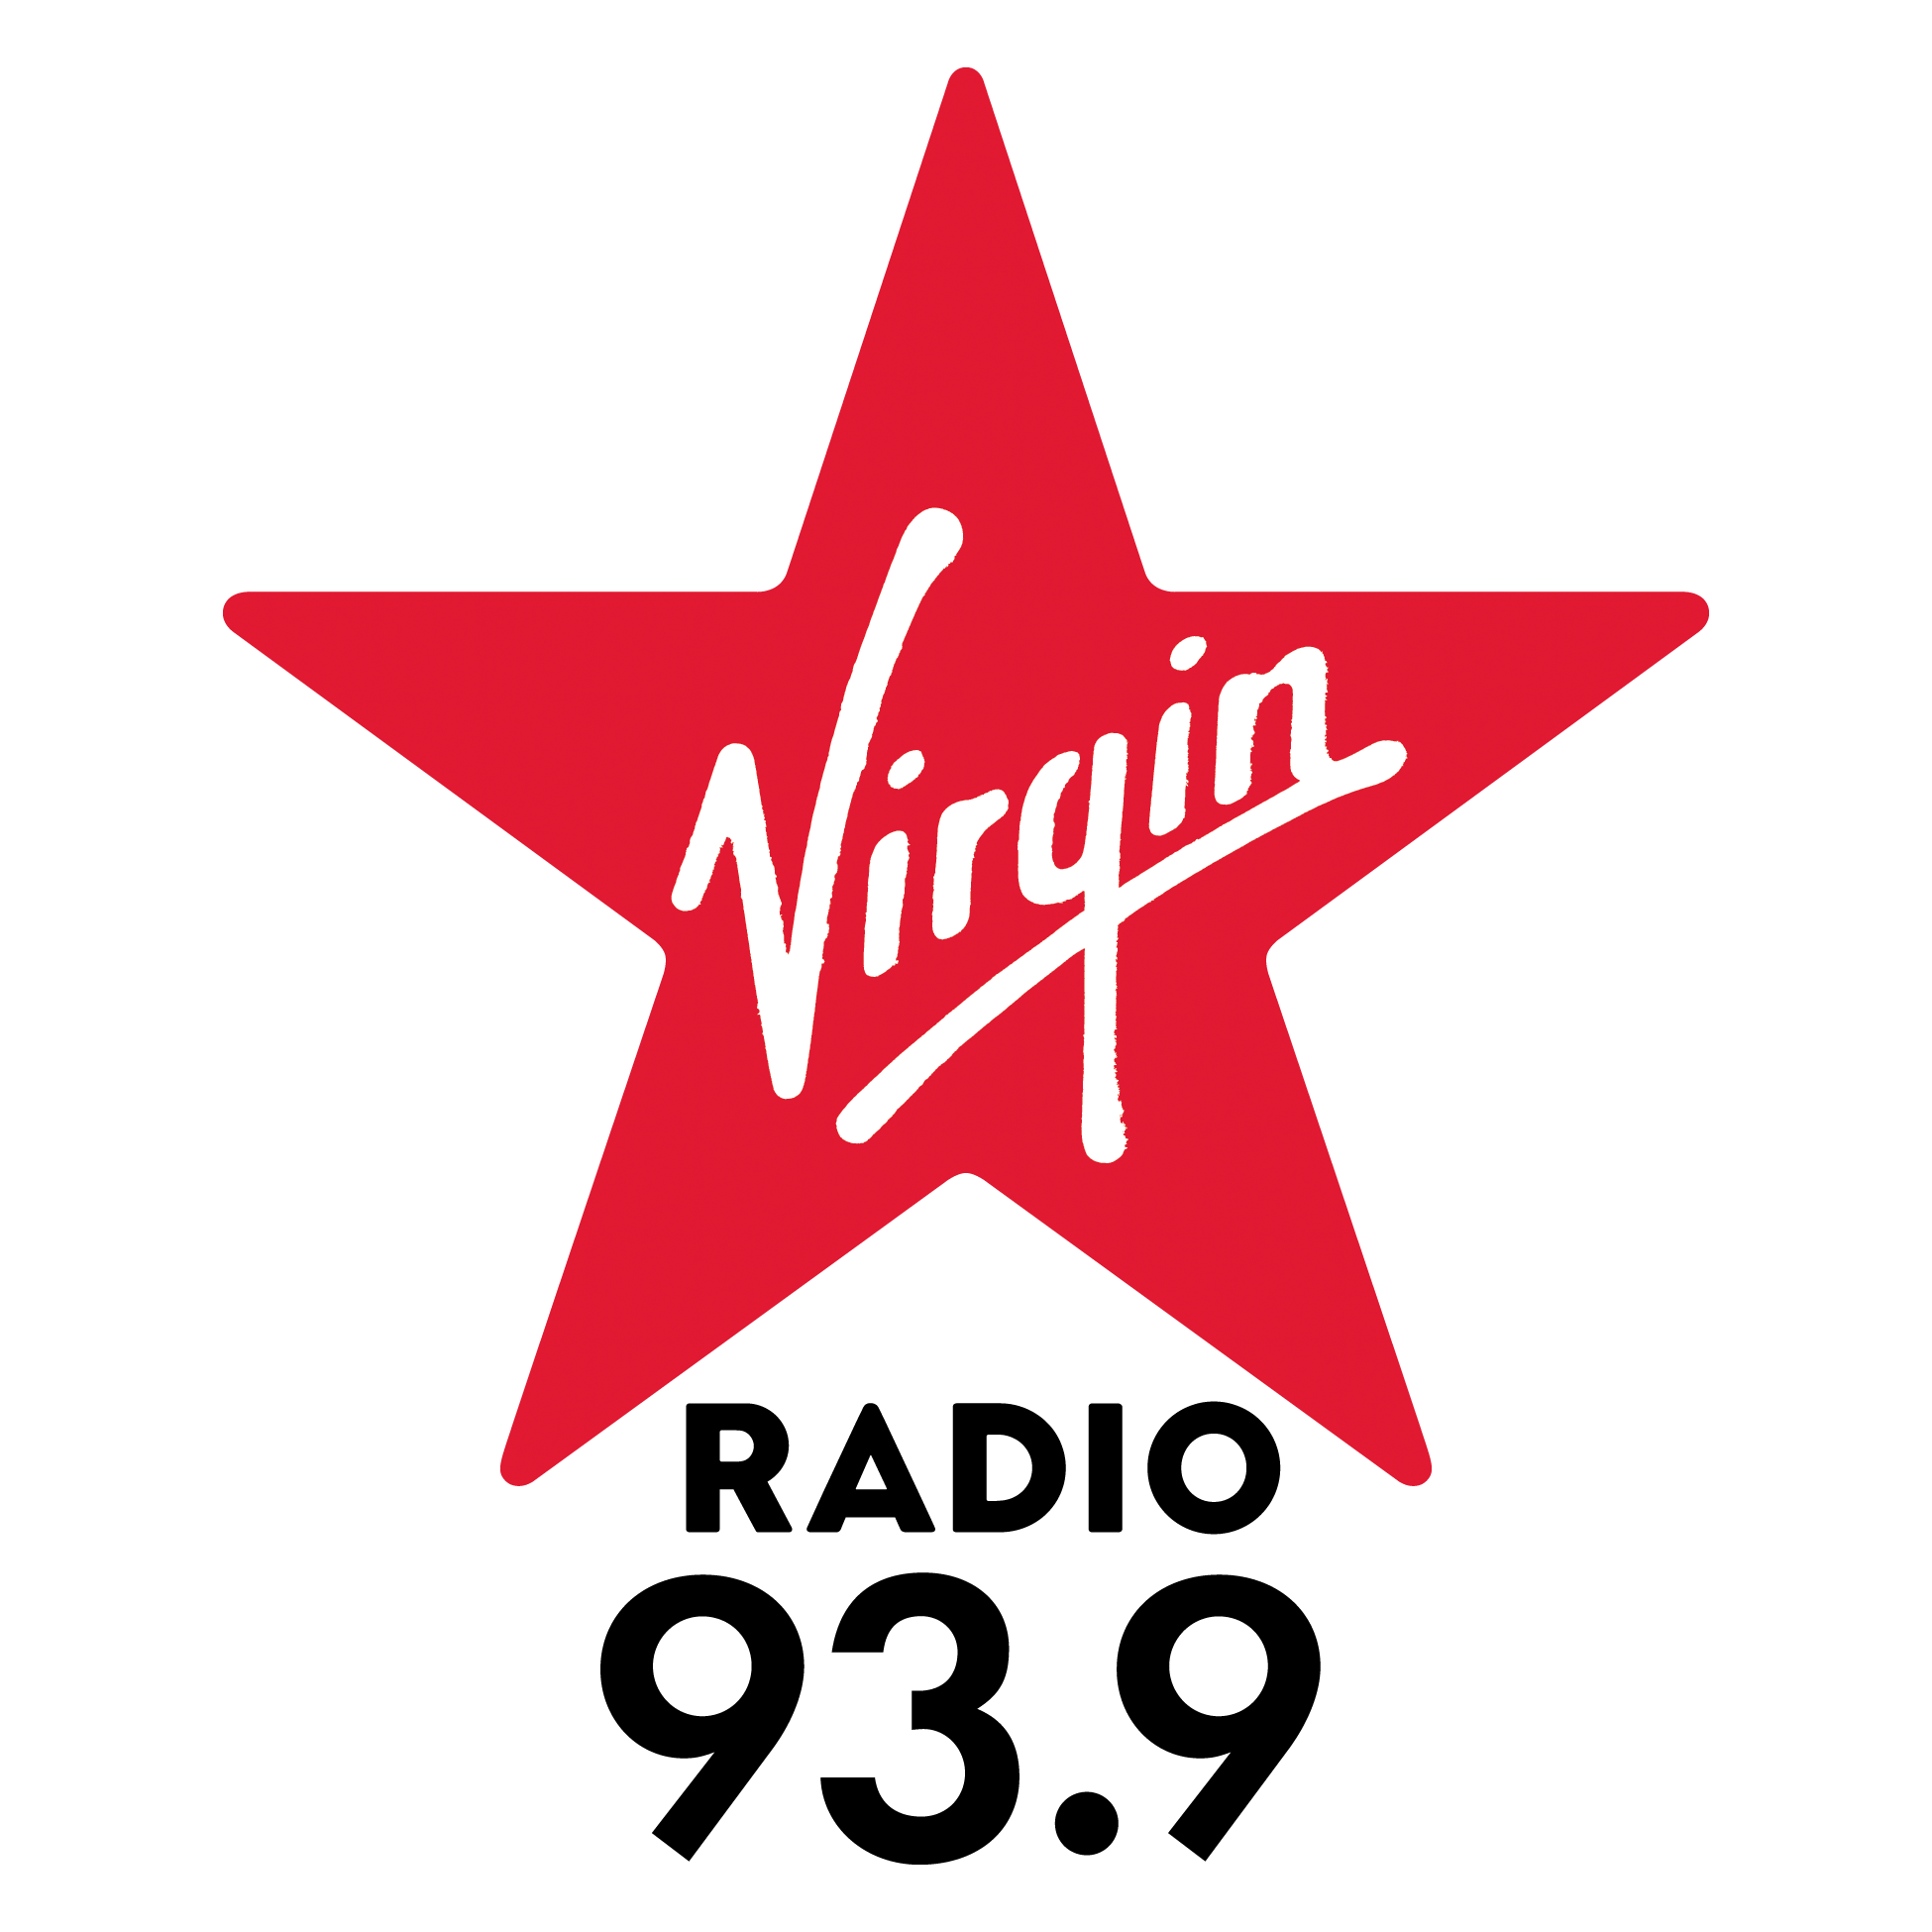 Virgin Radio 93.9 logo